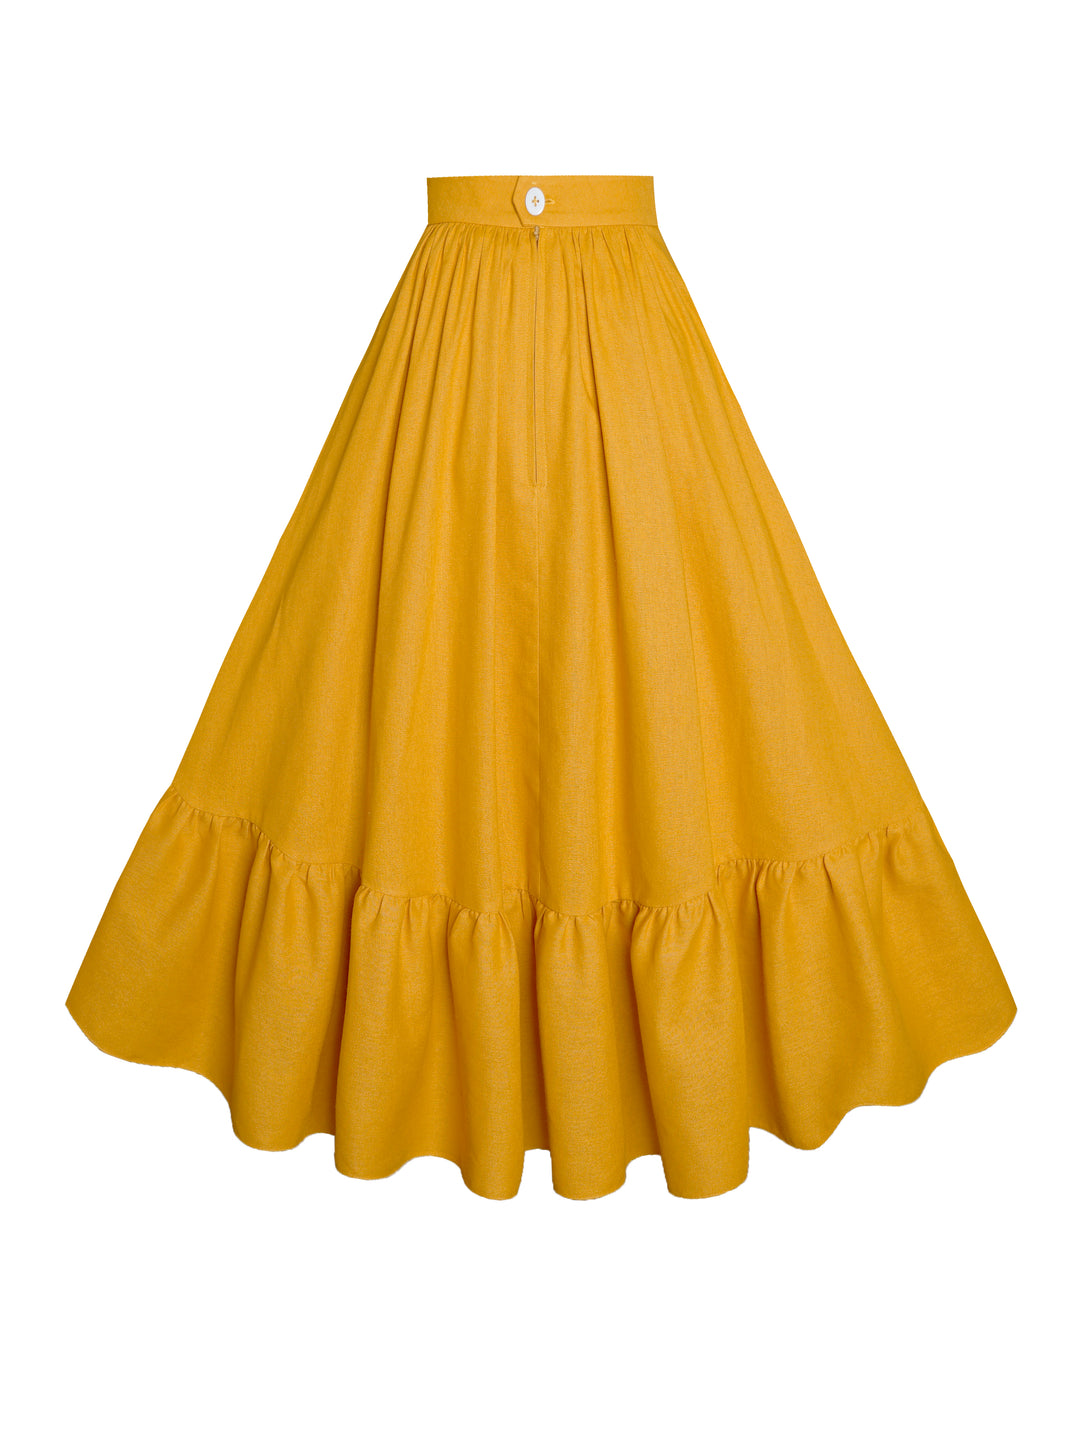 MTO - Rosita Skirt in Tuscany Yellow Linen